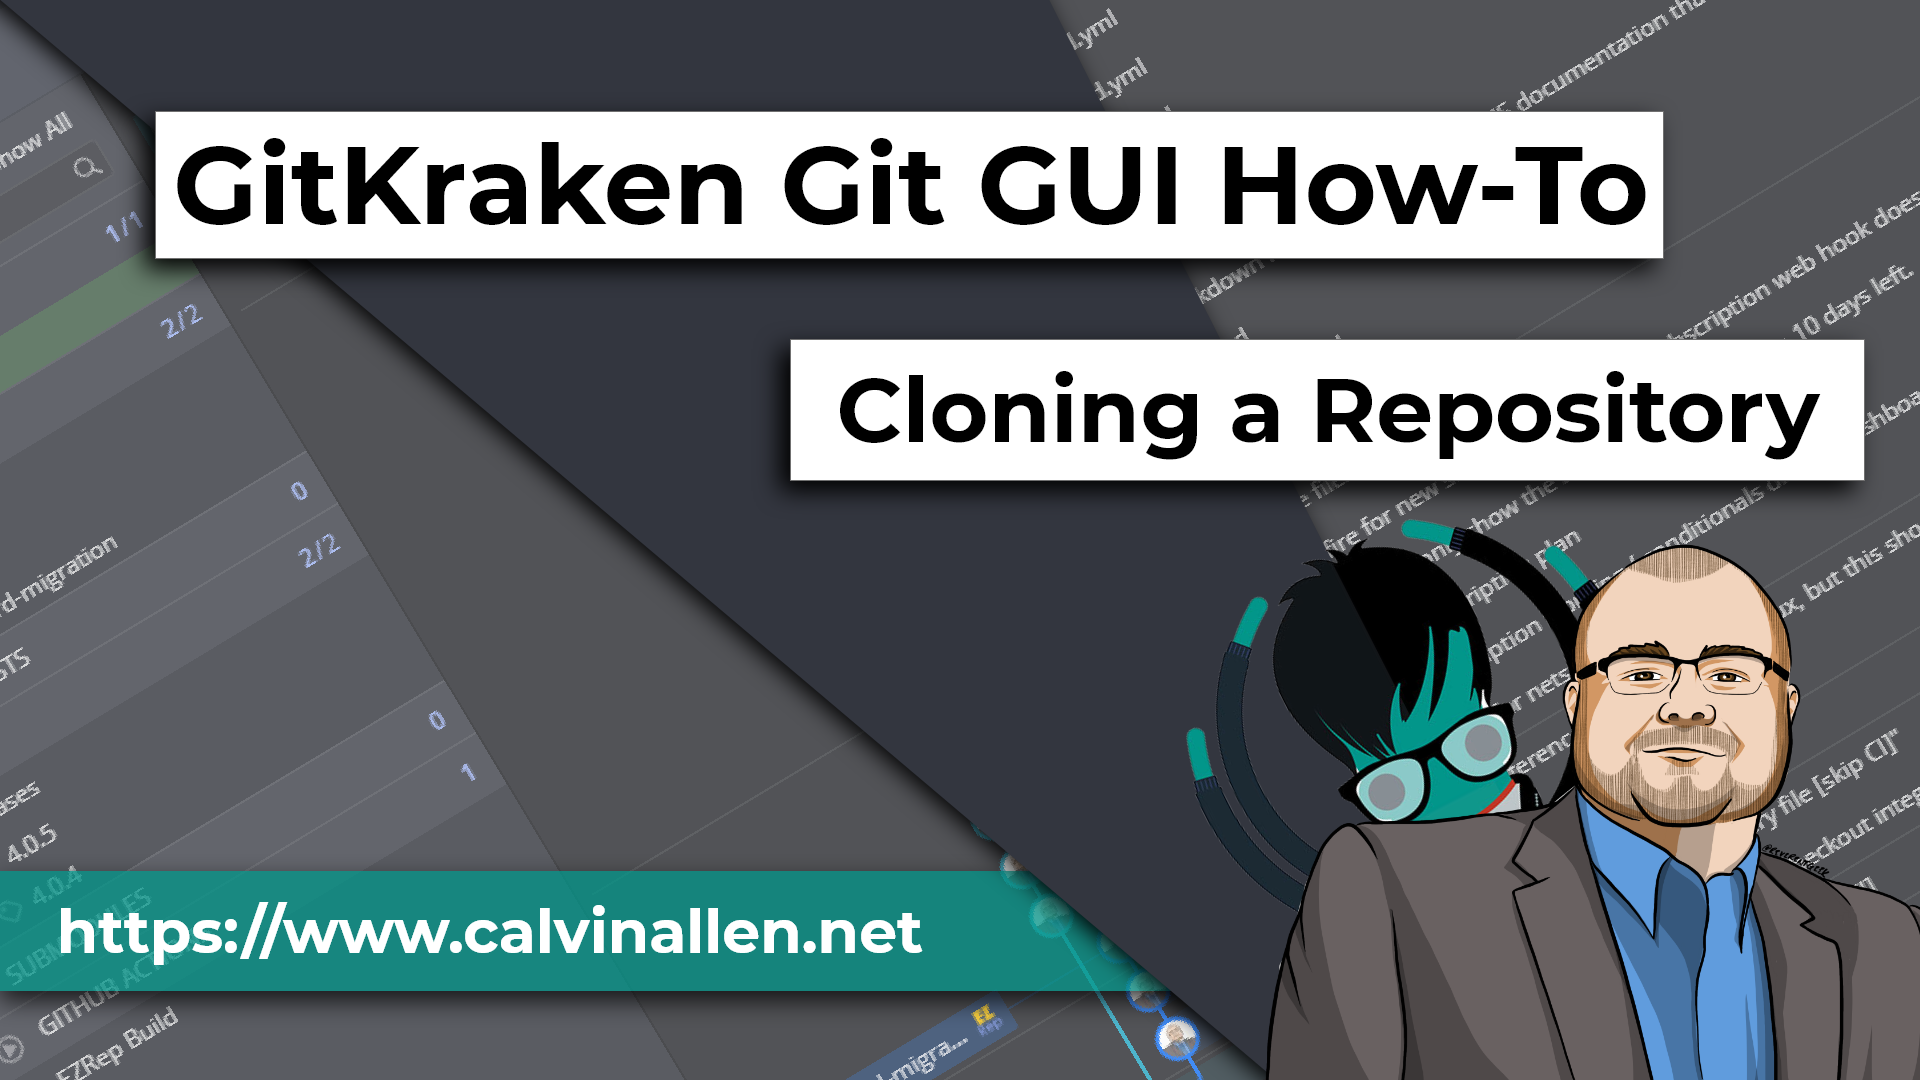 GitKraken Git GUI How-To: Cloning a Repository